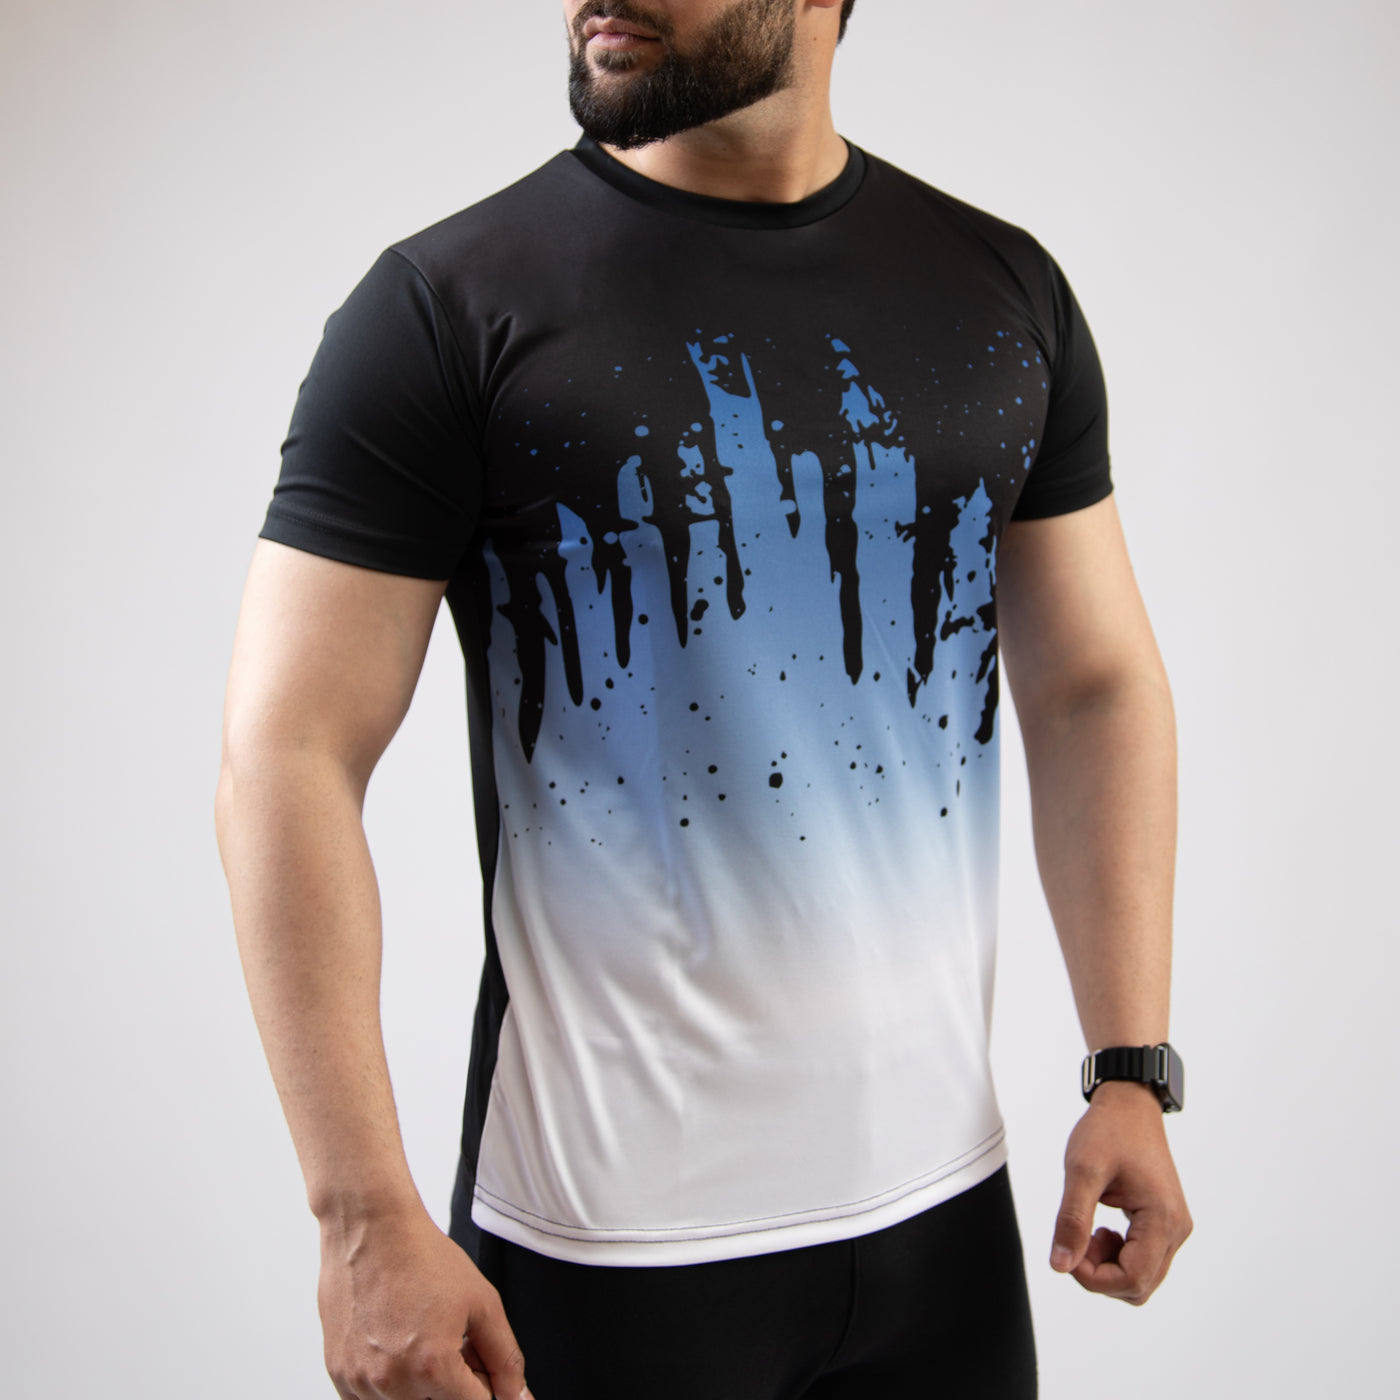 Black & White Splash with Blue Gradient Sublimated Quick Dry T-Shirt